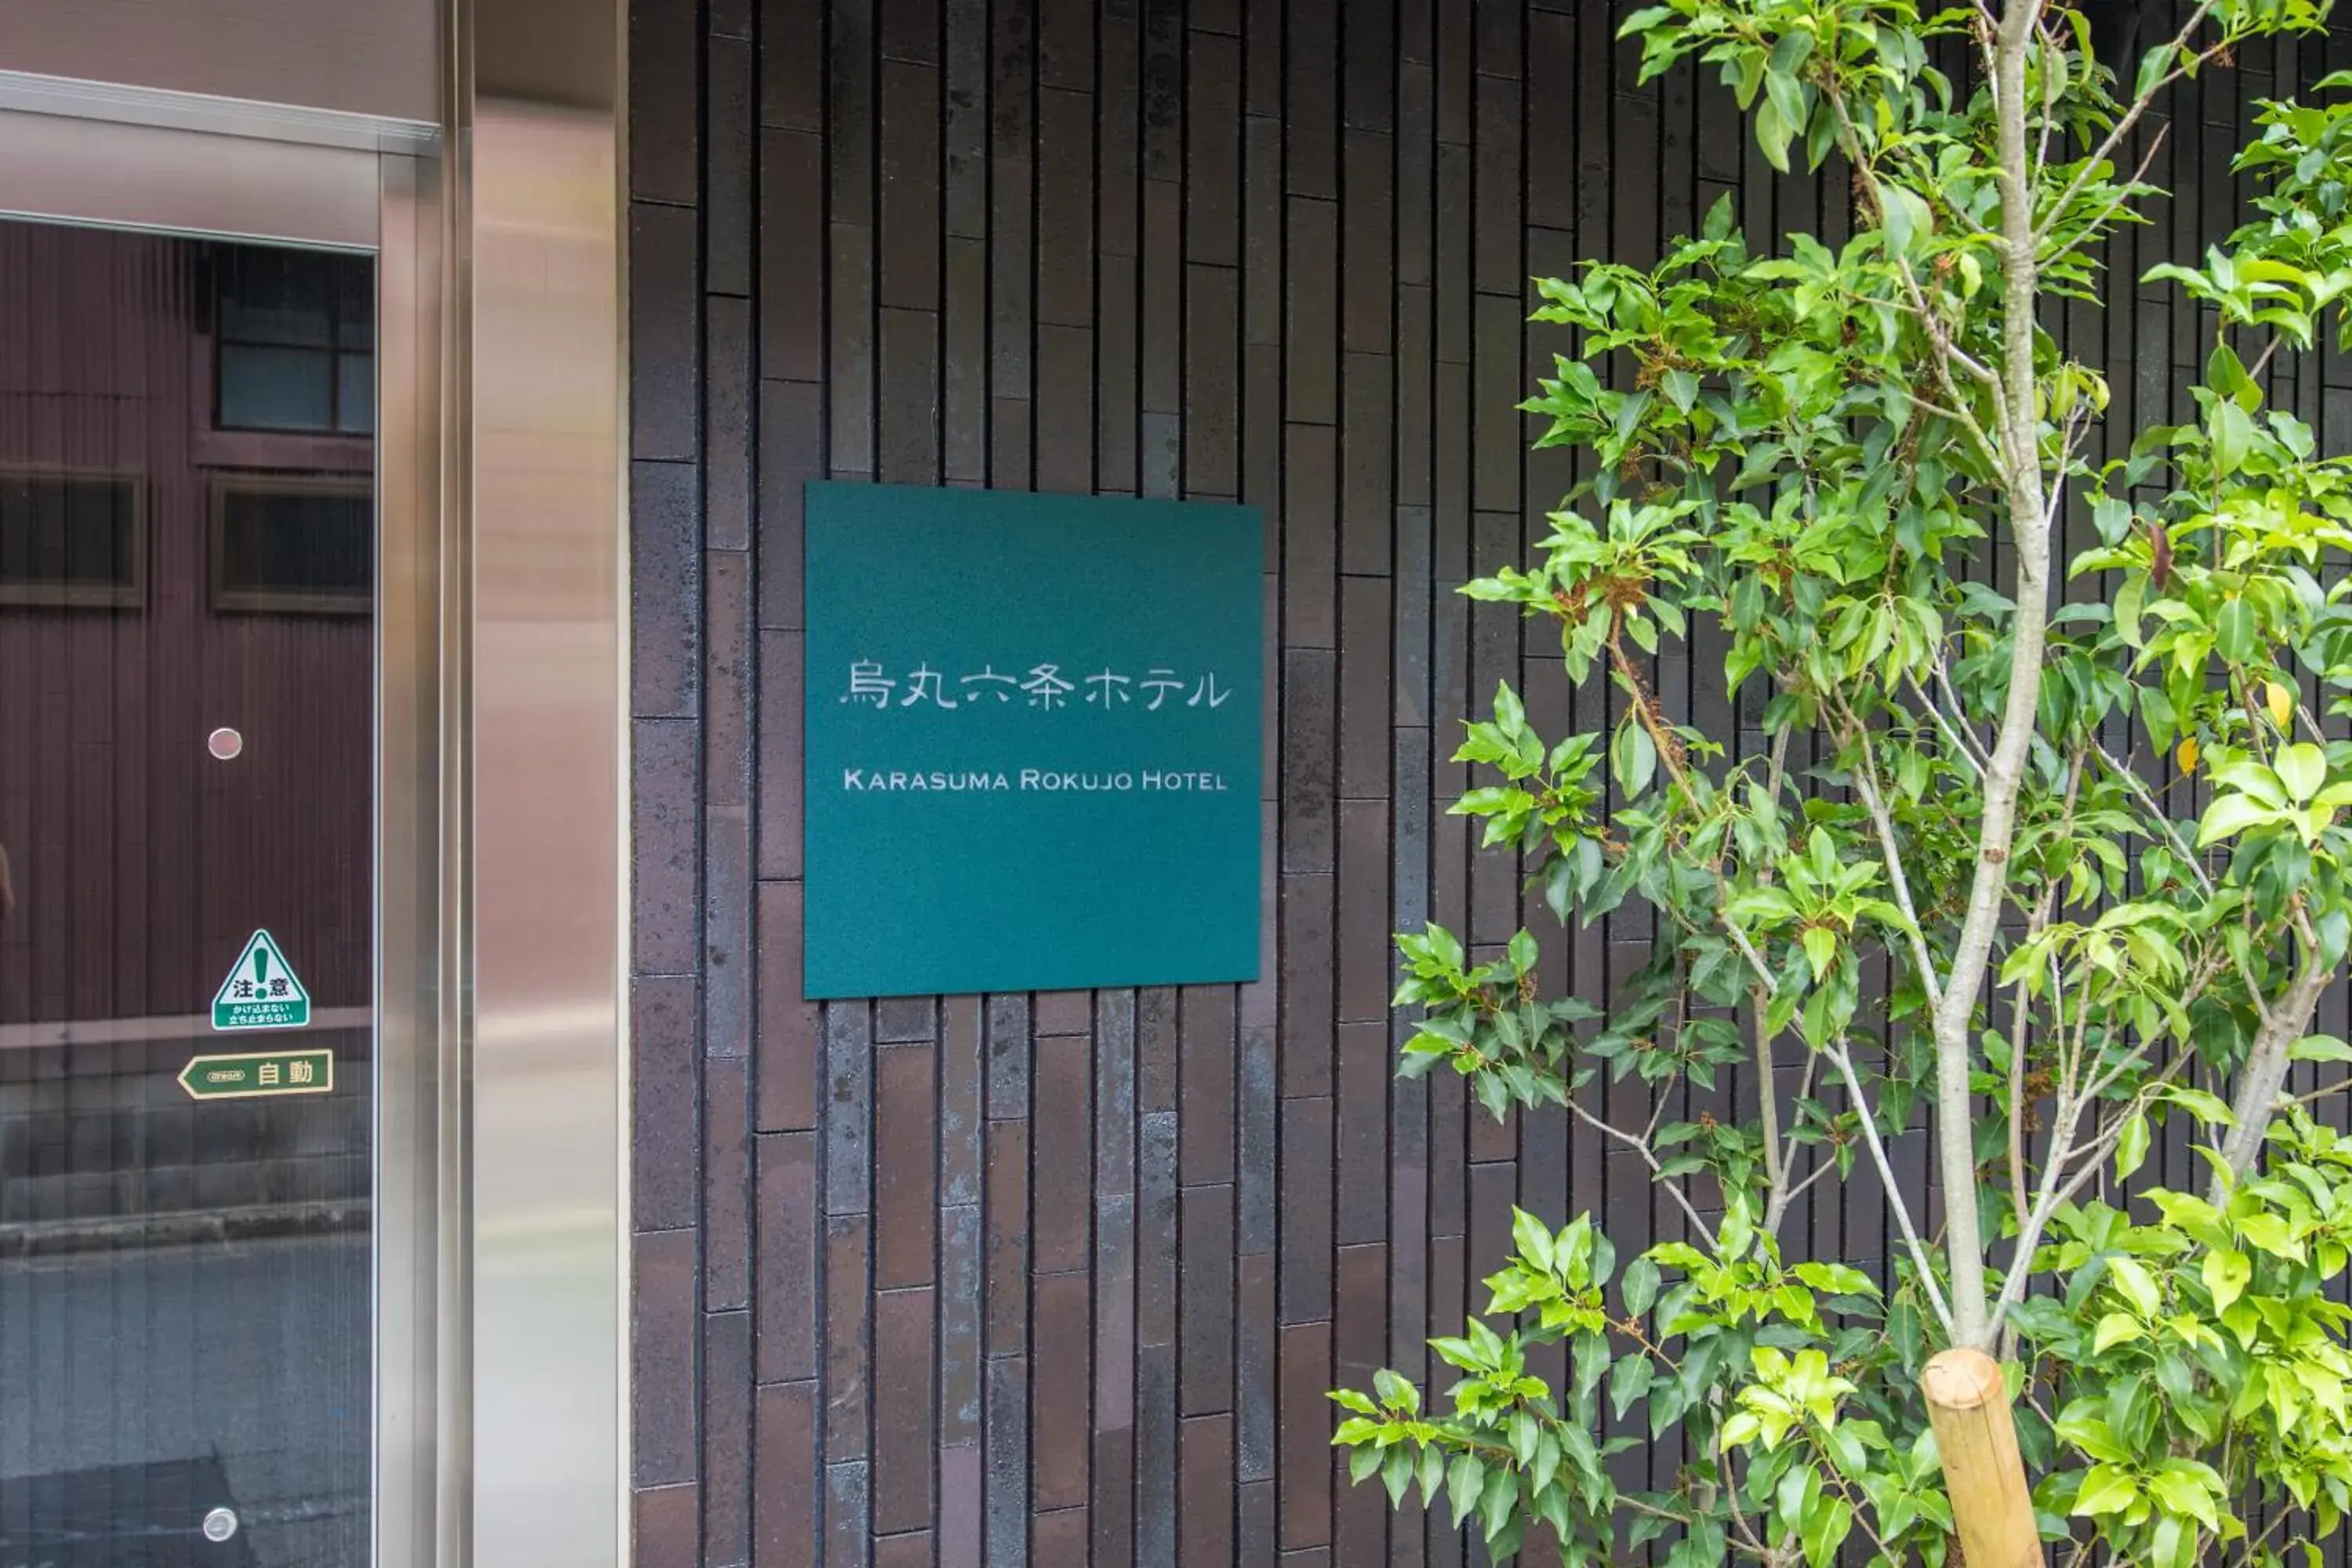 Property logo or sign in Karasuma Rokujo Hotel